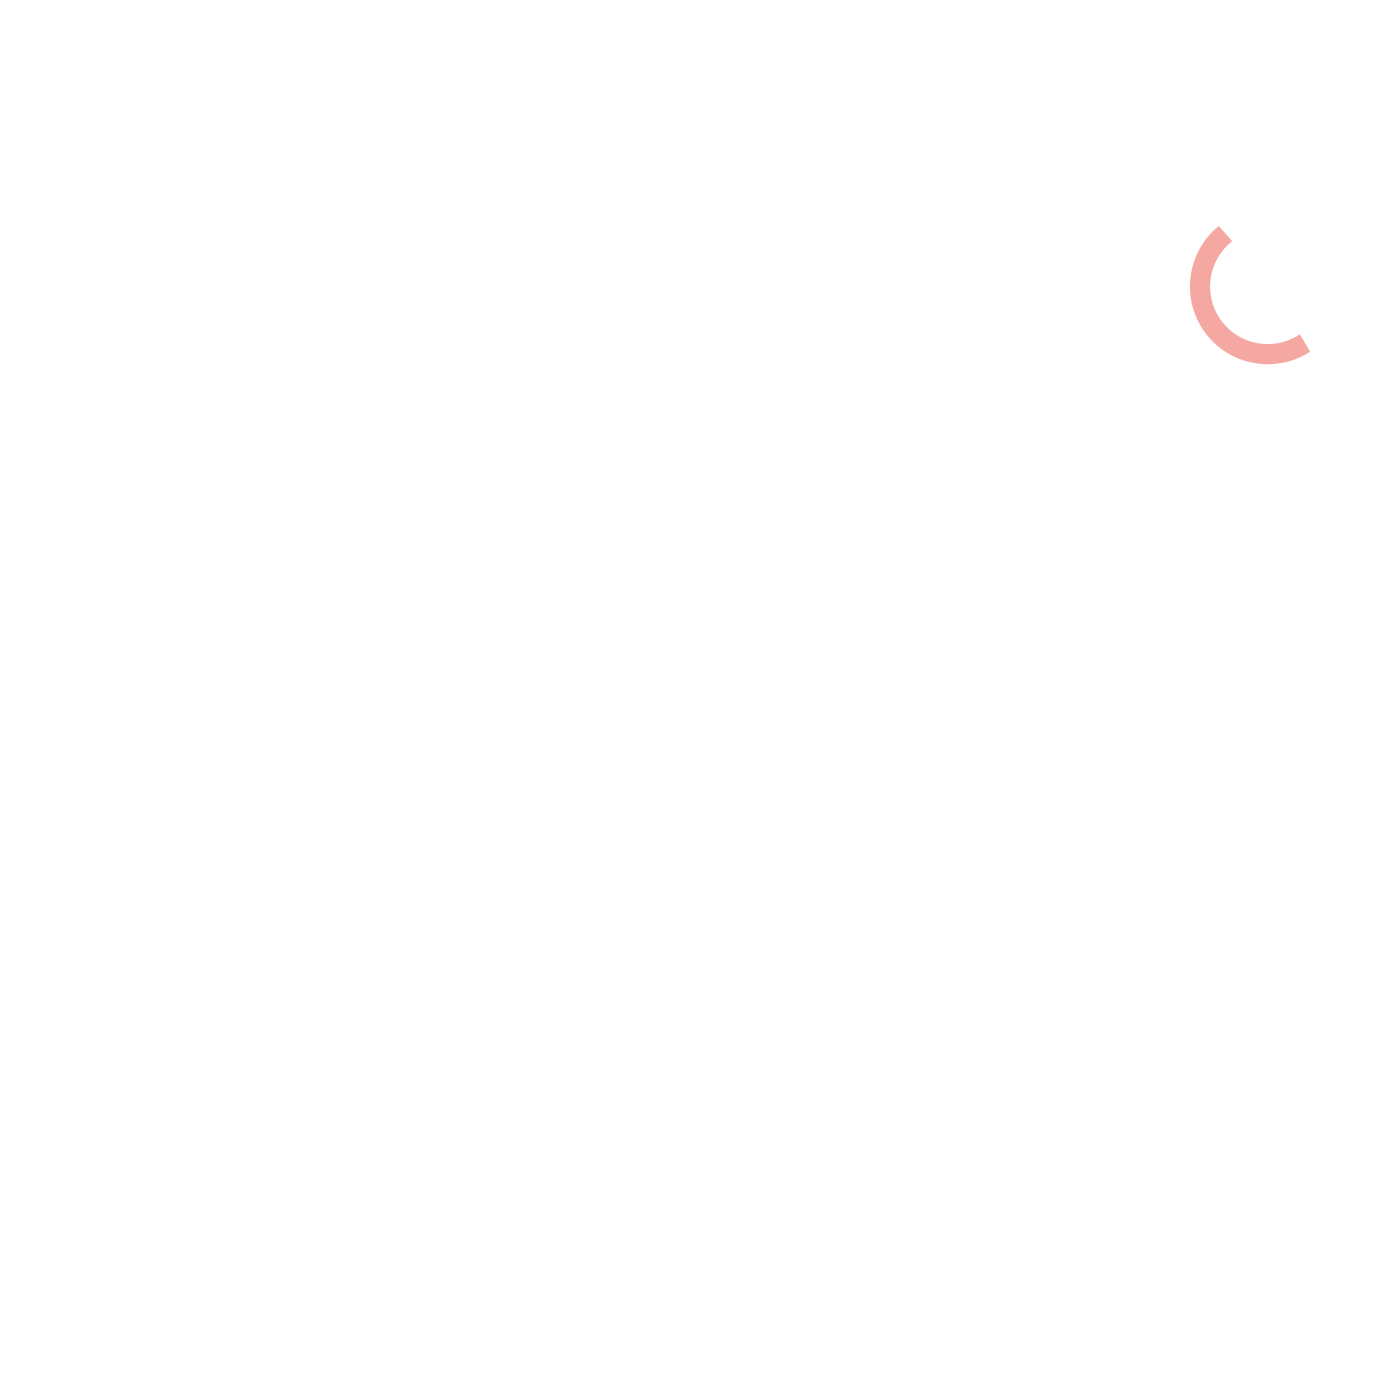 living cancer free